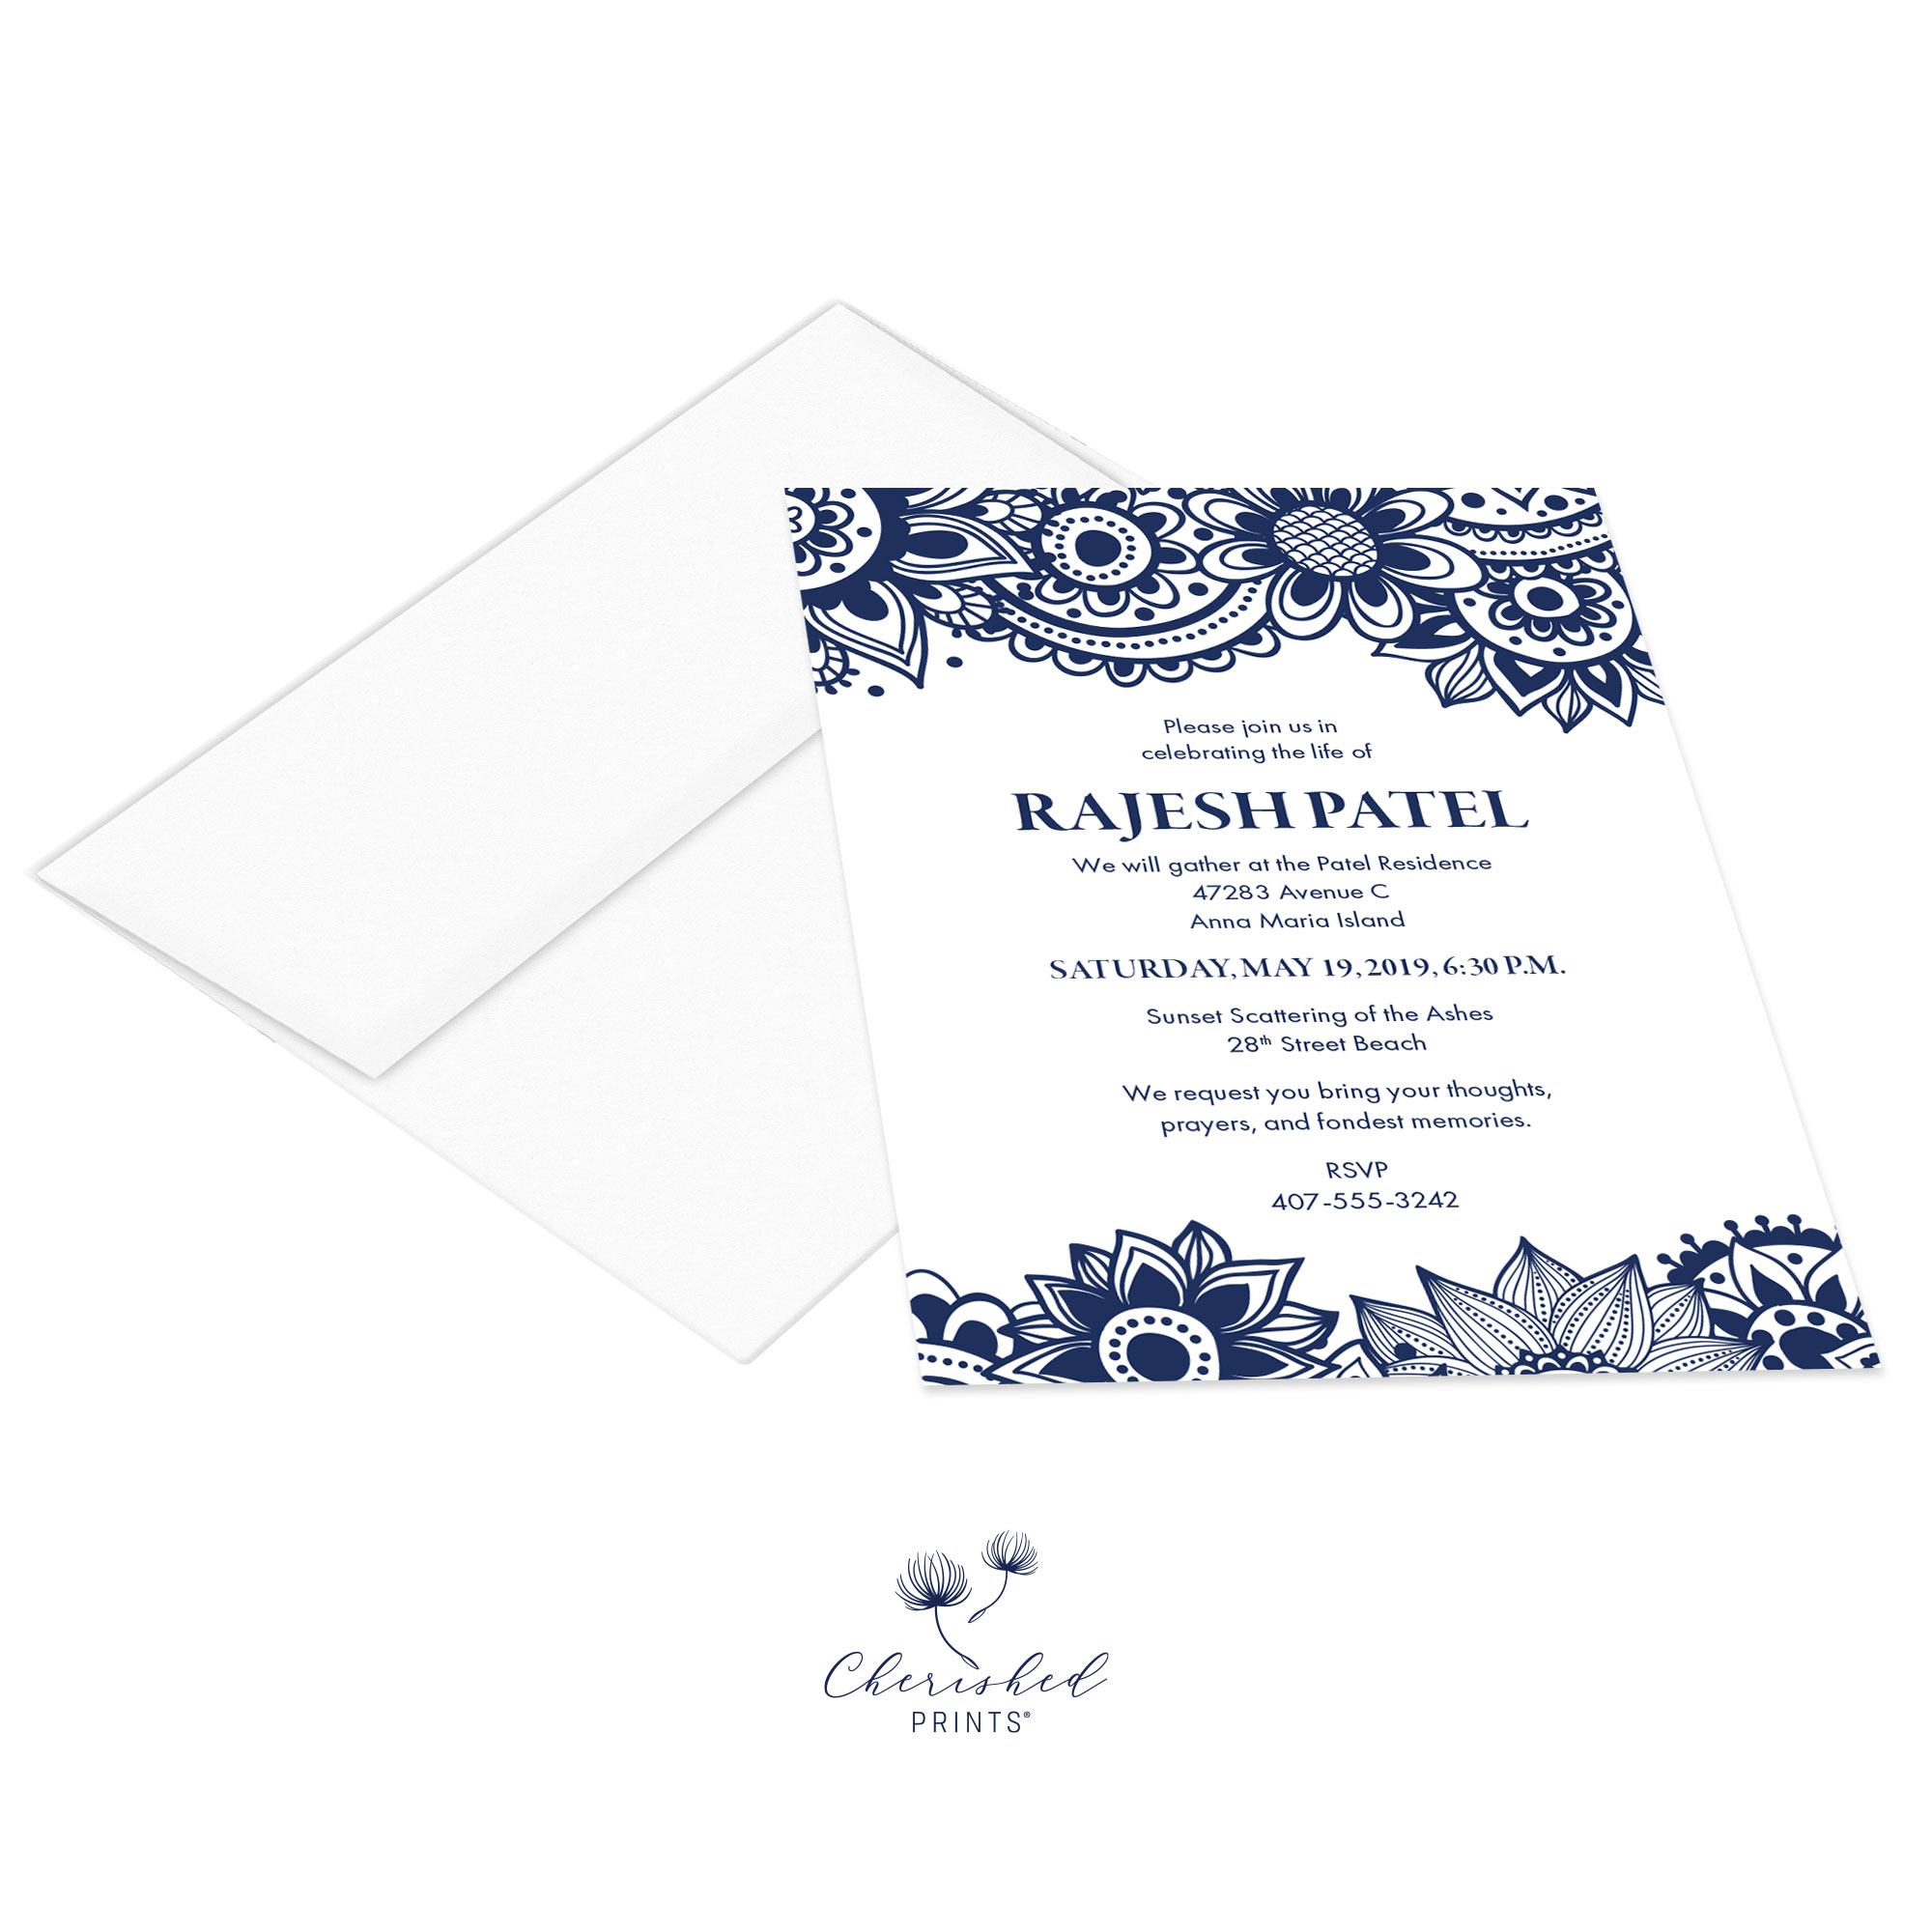 Block Print Invitation with envelope